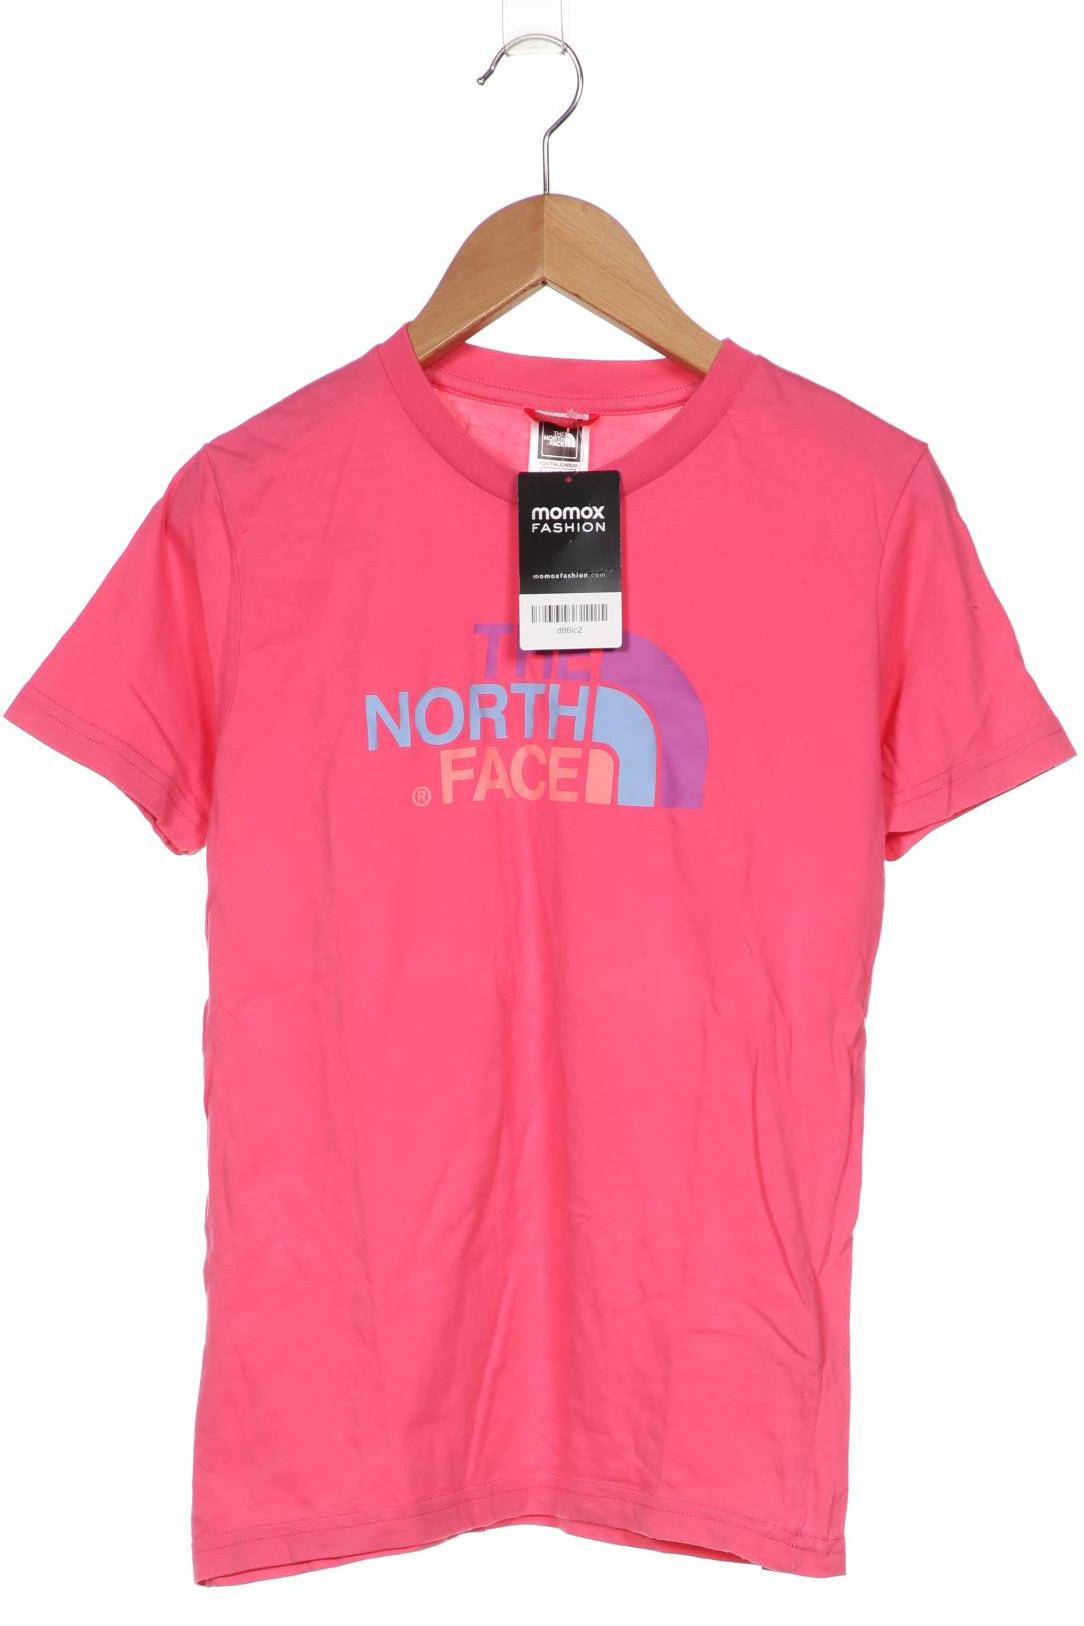 The North Face Mädchen T-Shirt, pink von The North Face